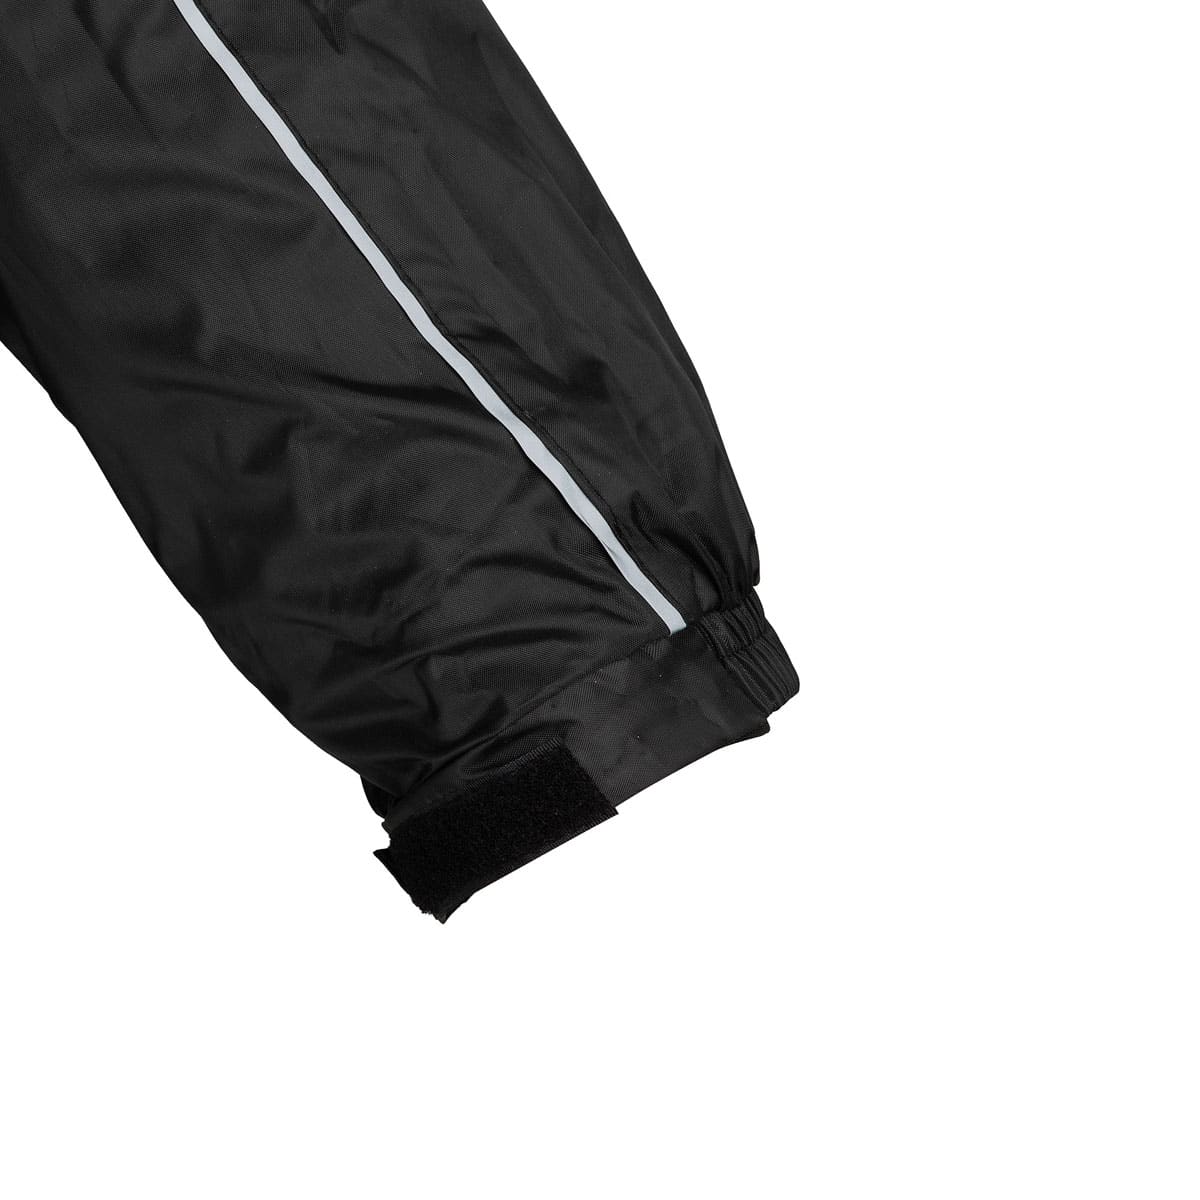 Oxford Rainseal Over Jacket WP - Black wrist detail